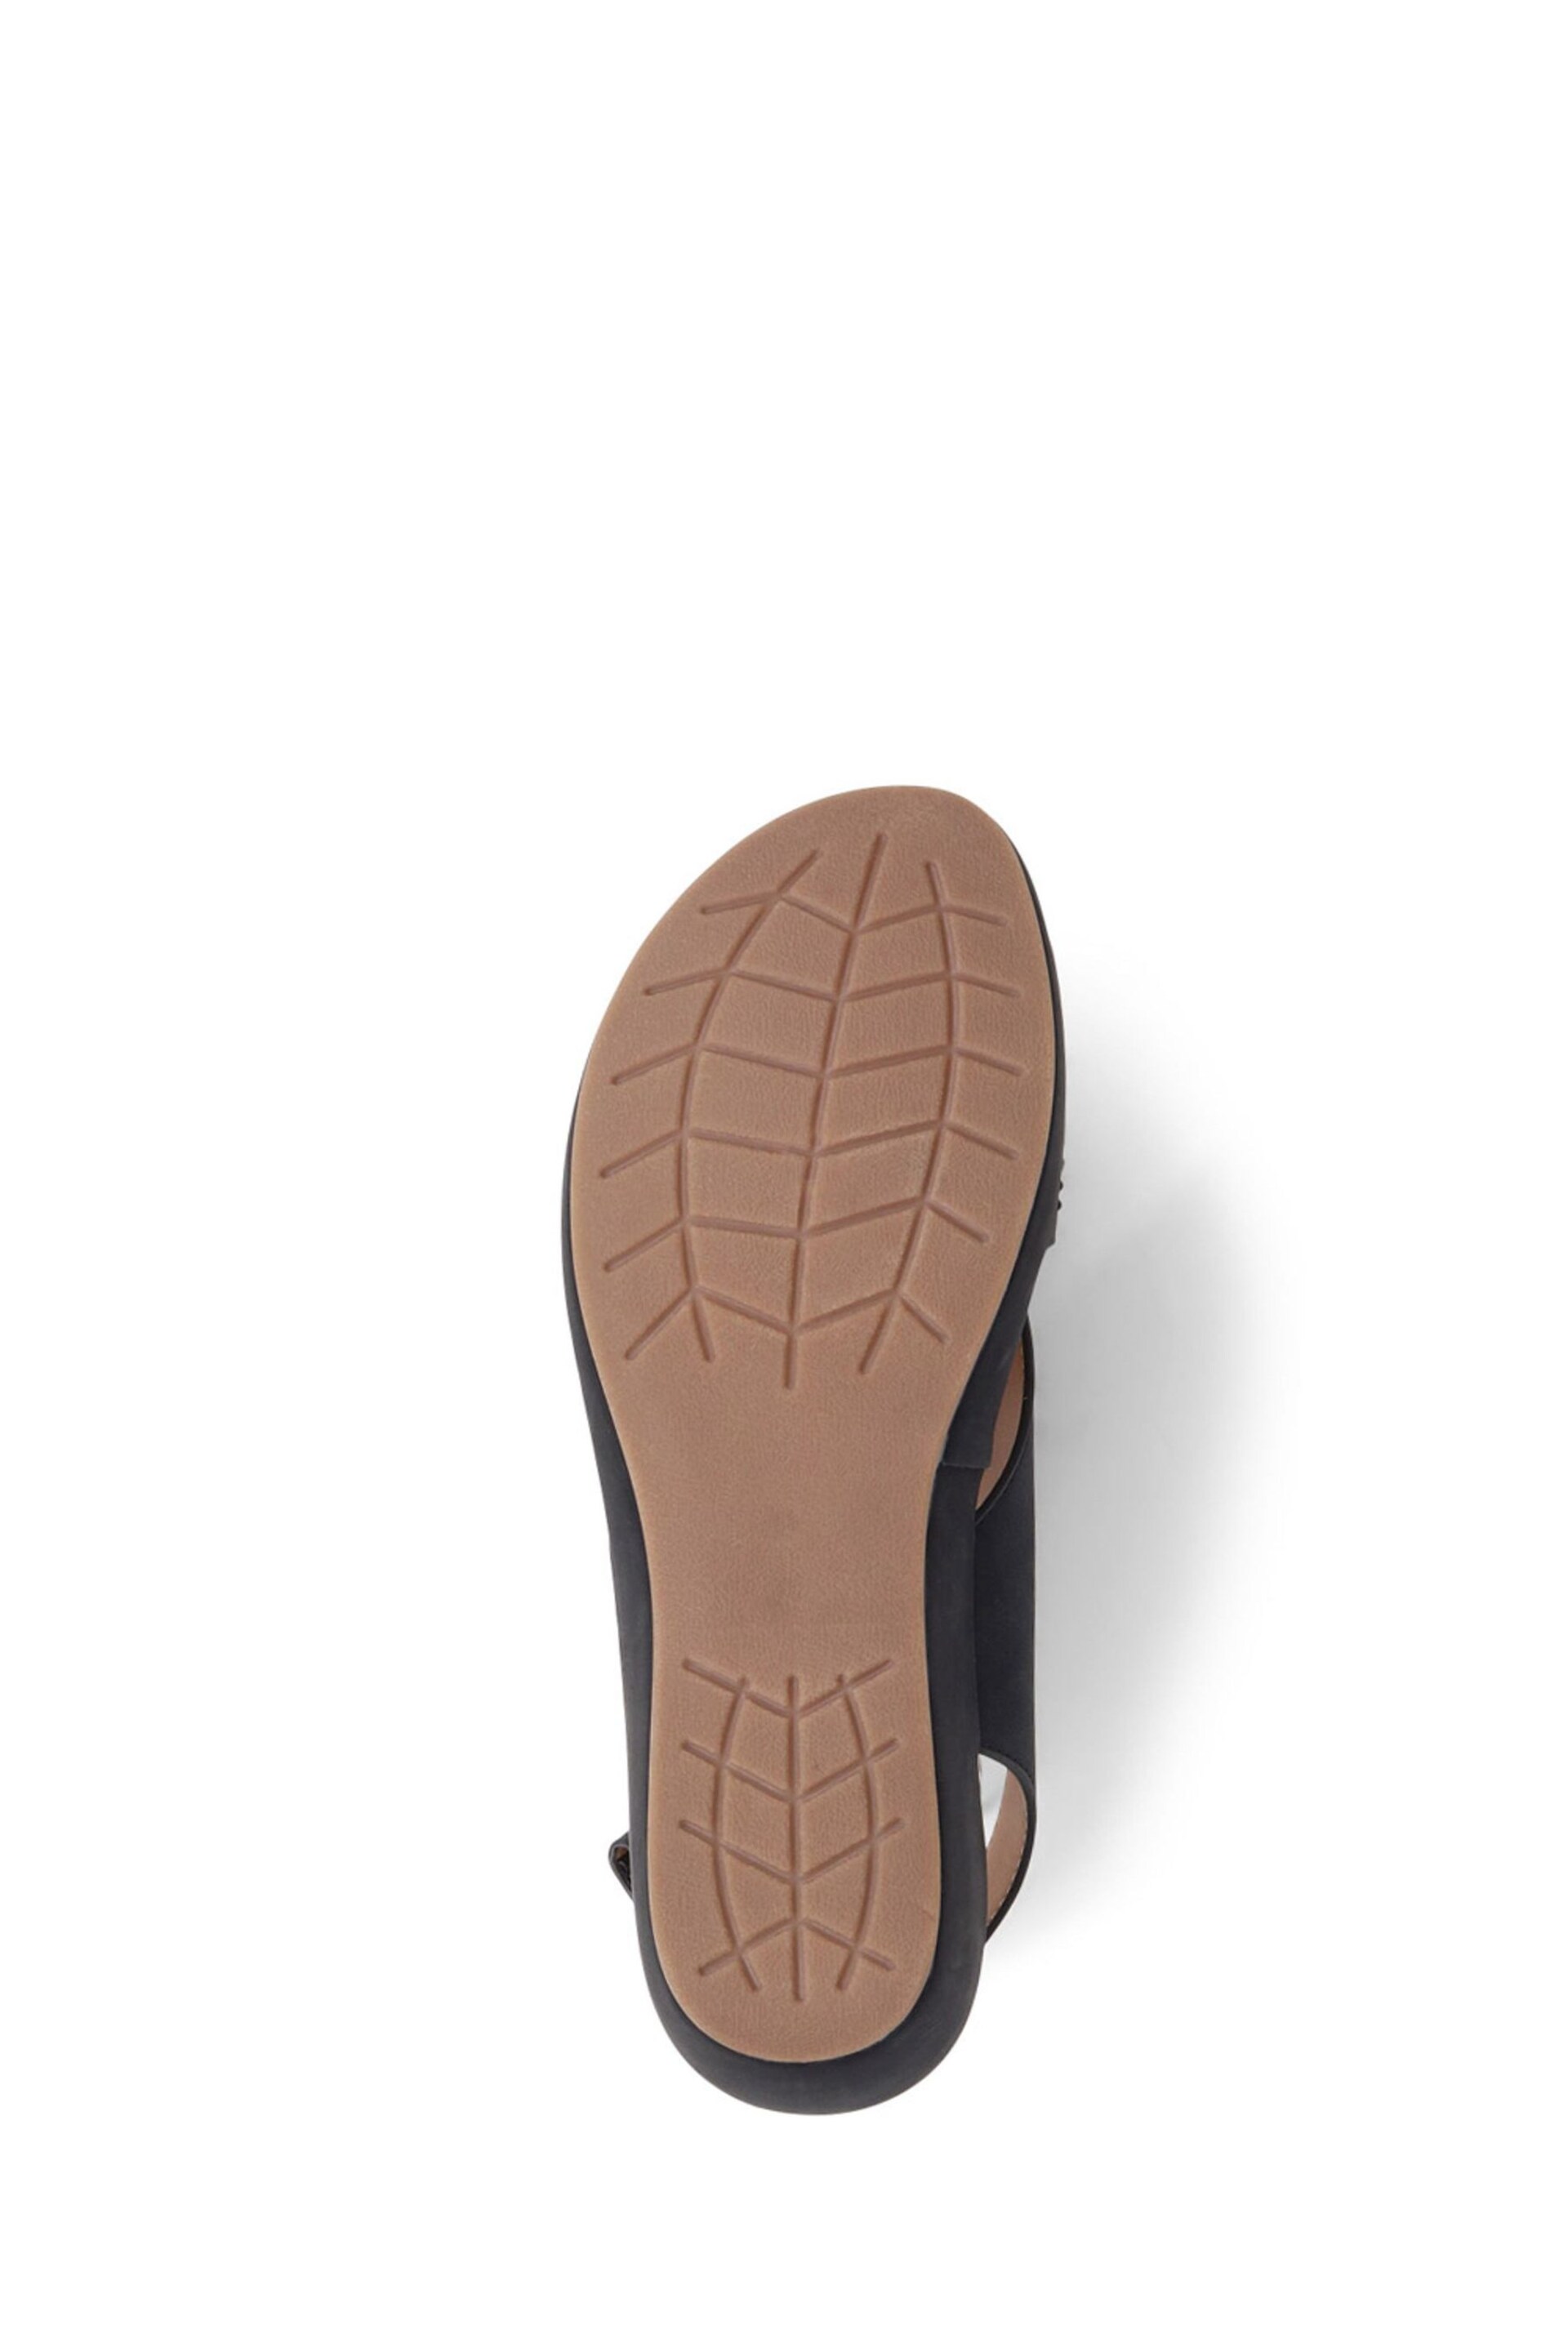 Pavers Ankle Strap Black Sandals - Image 5 of 5